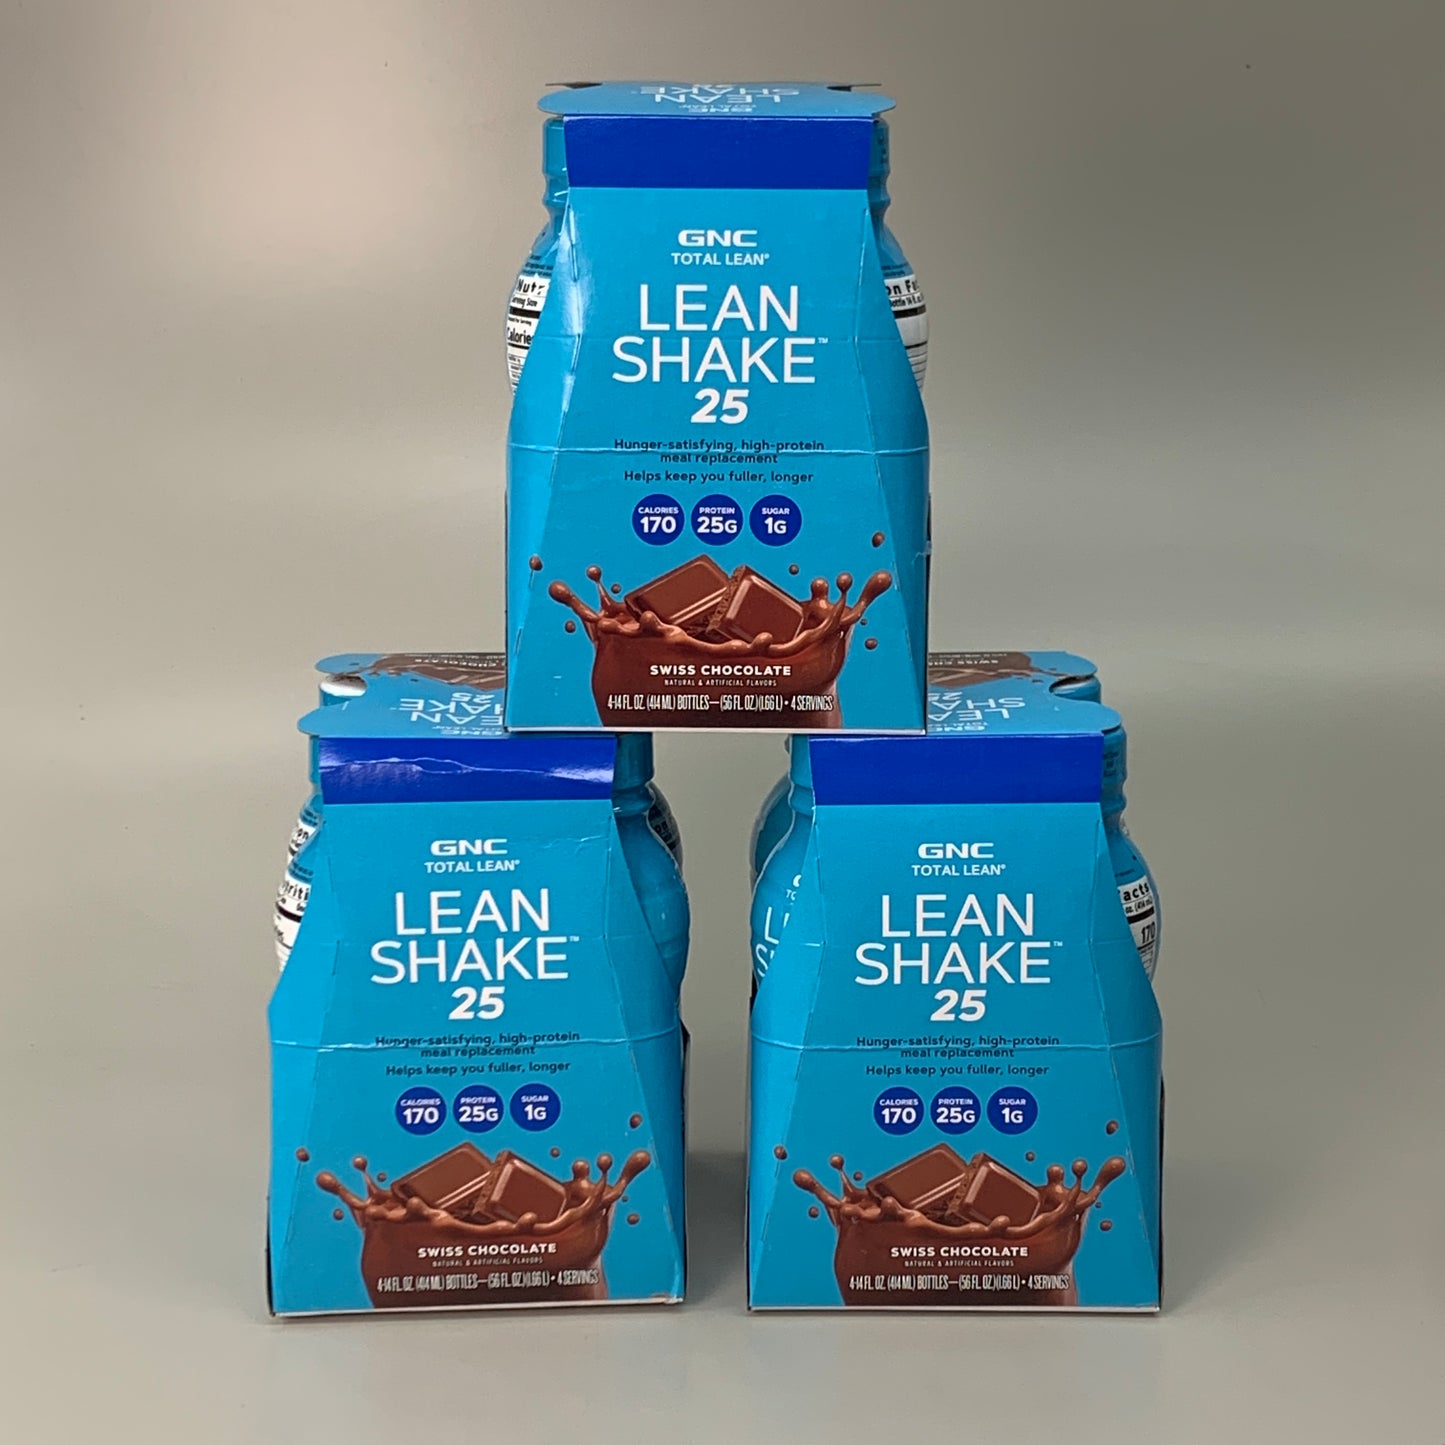 Gnc Total Lean Lean Shake, Swiss Chocolate - 4 pack, 11 fl oz bottles